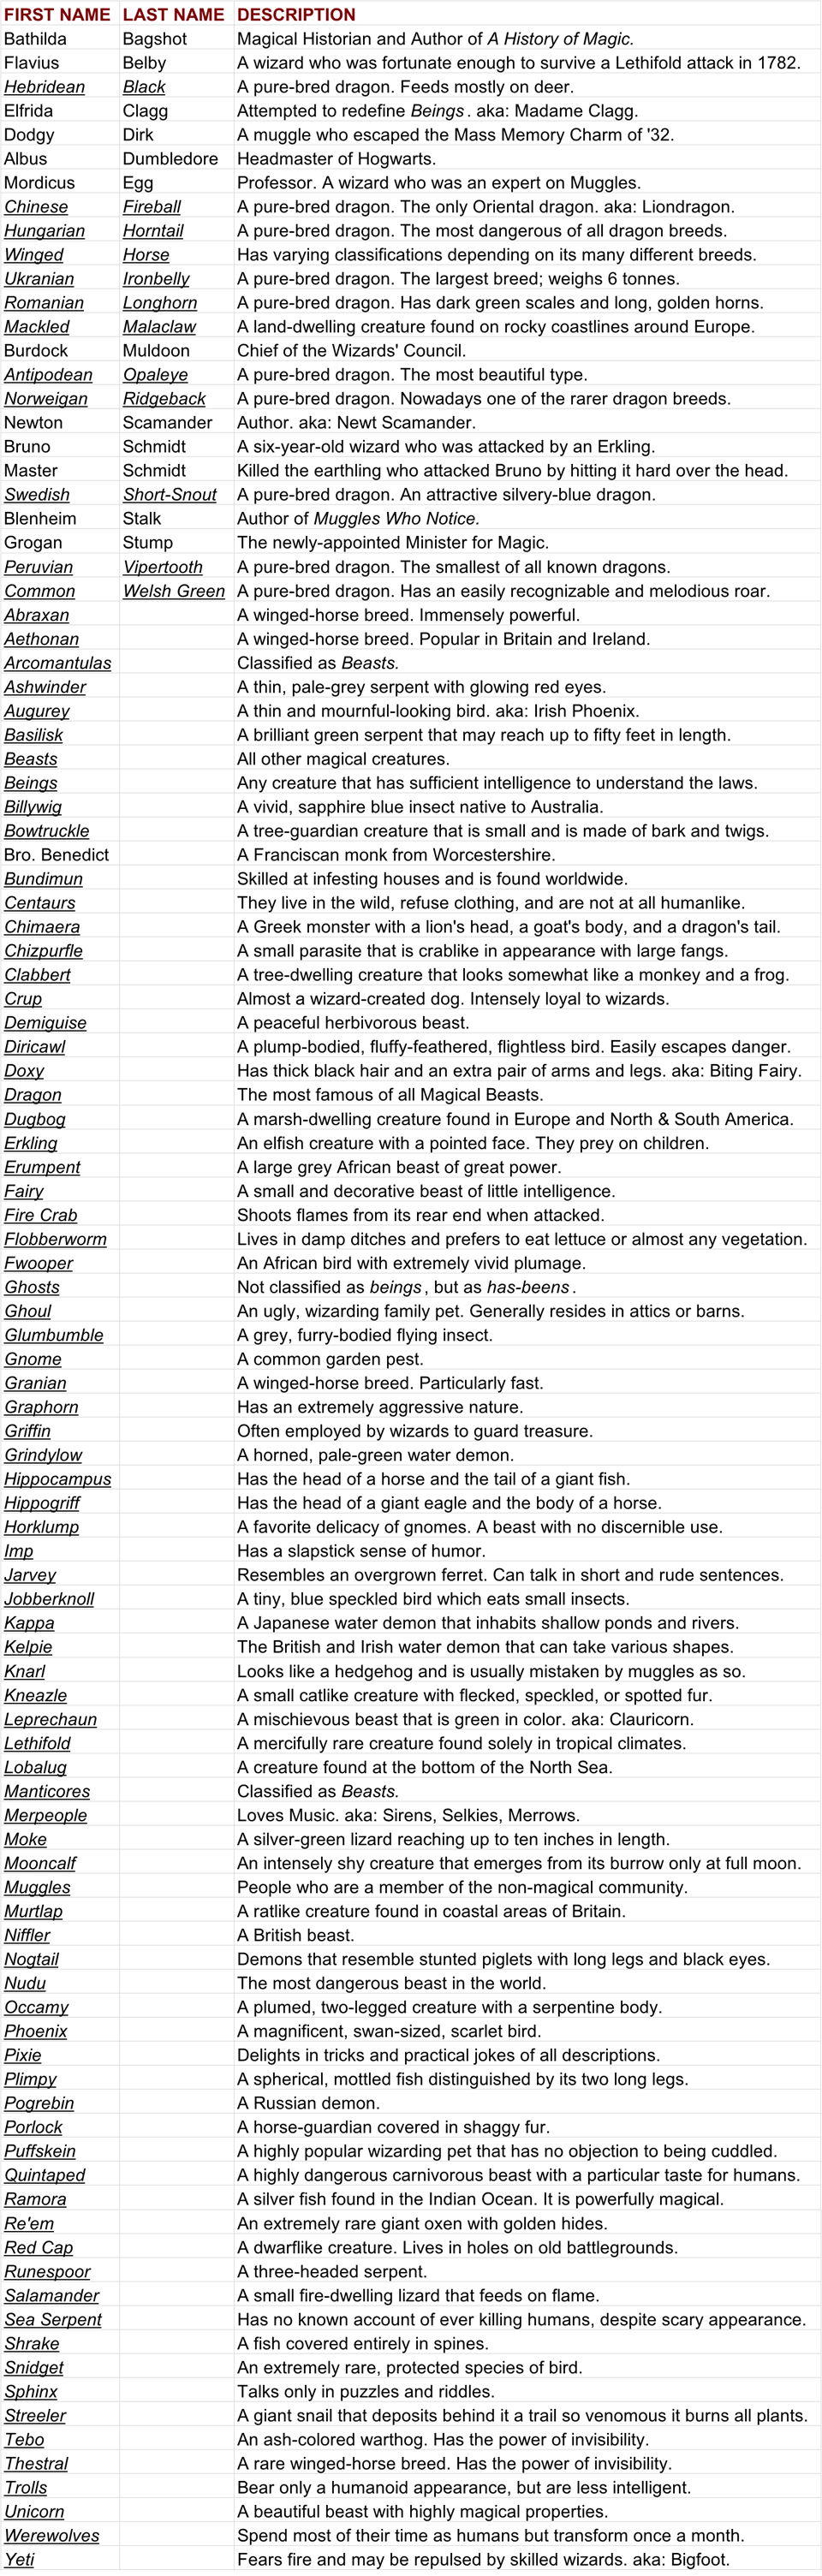 Fantastic Beasts Alphabetical Character List